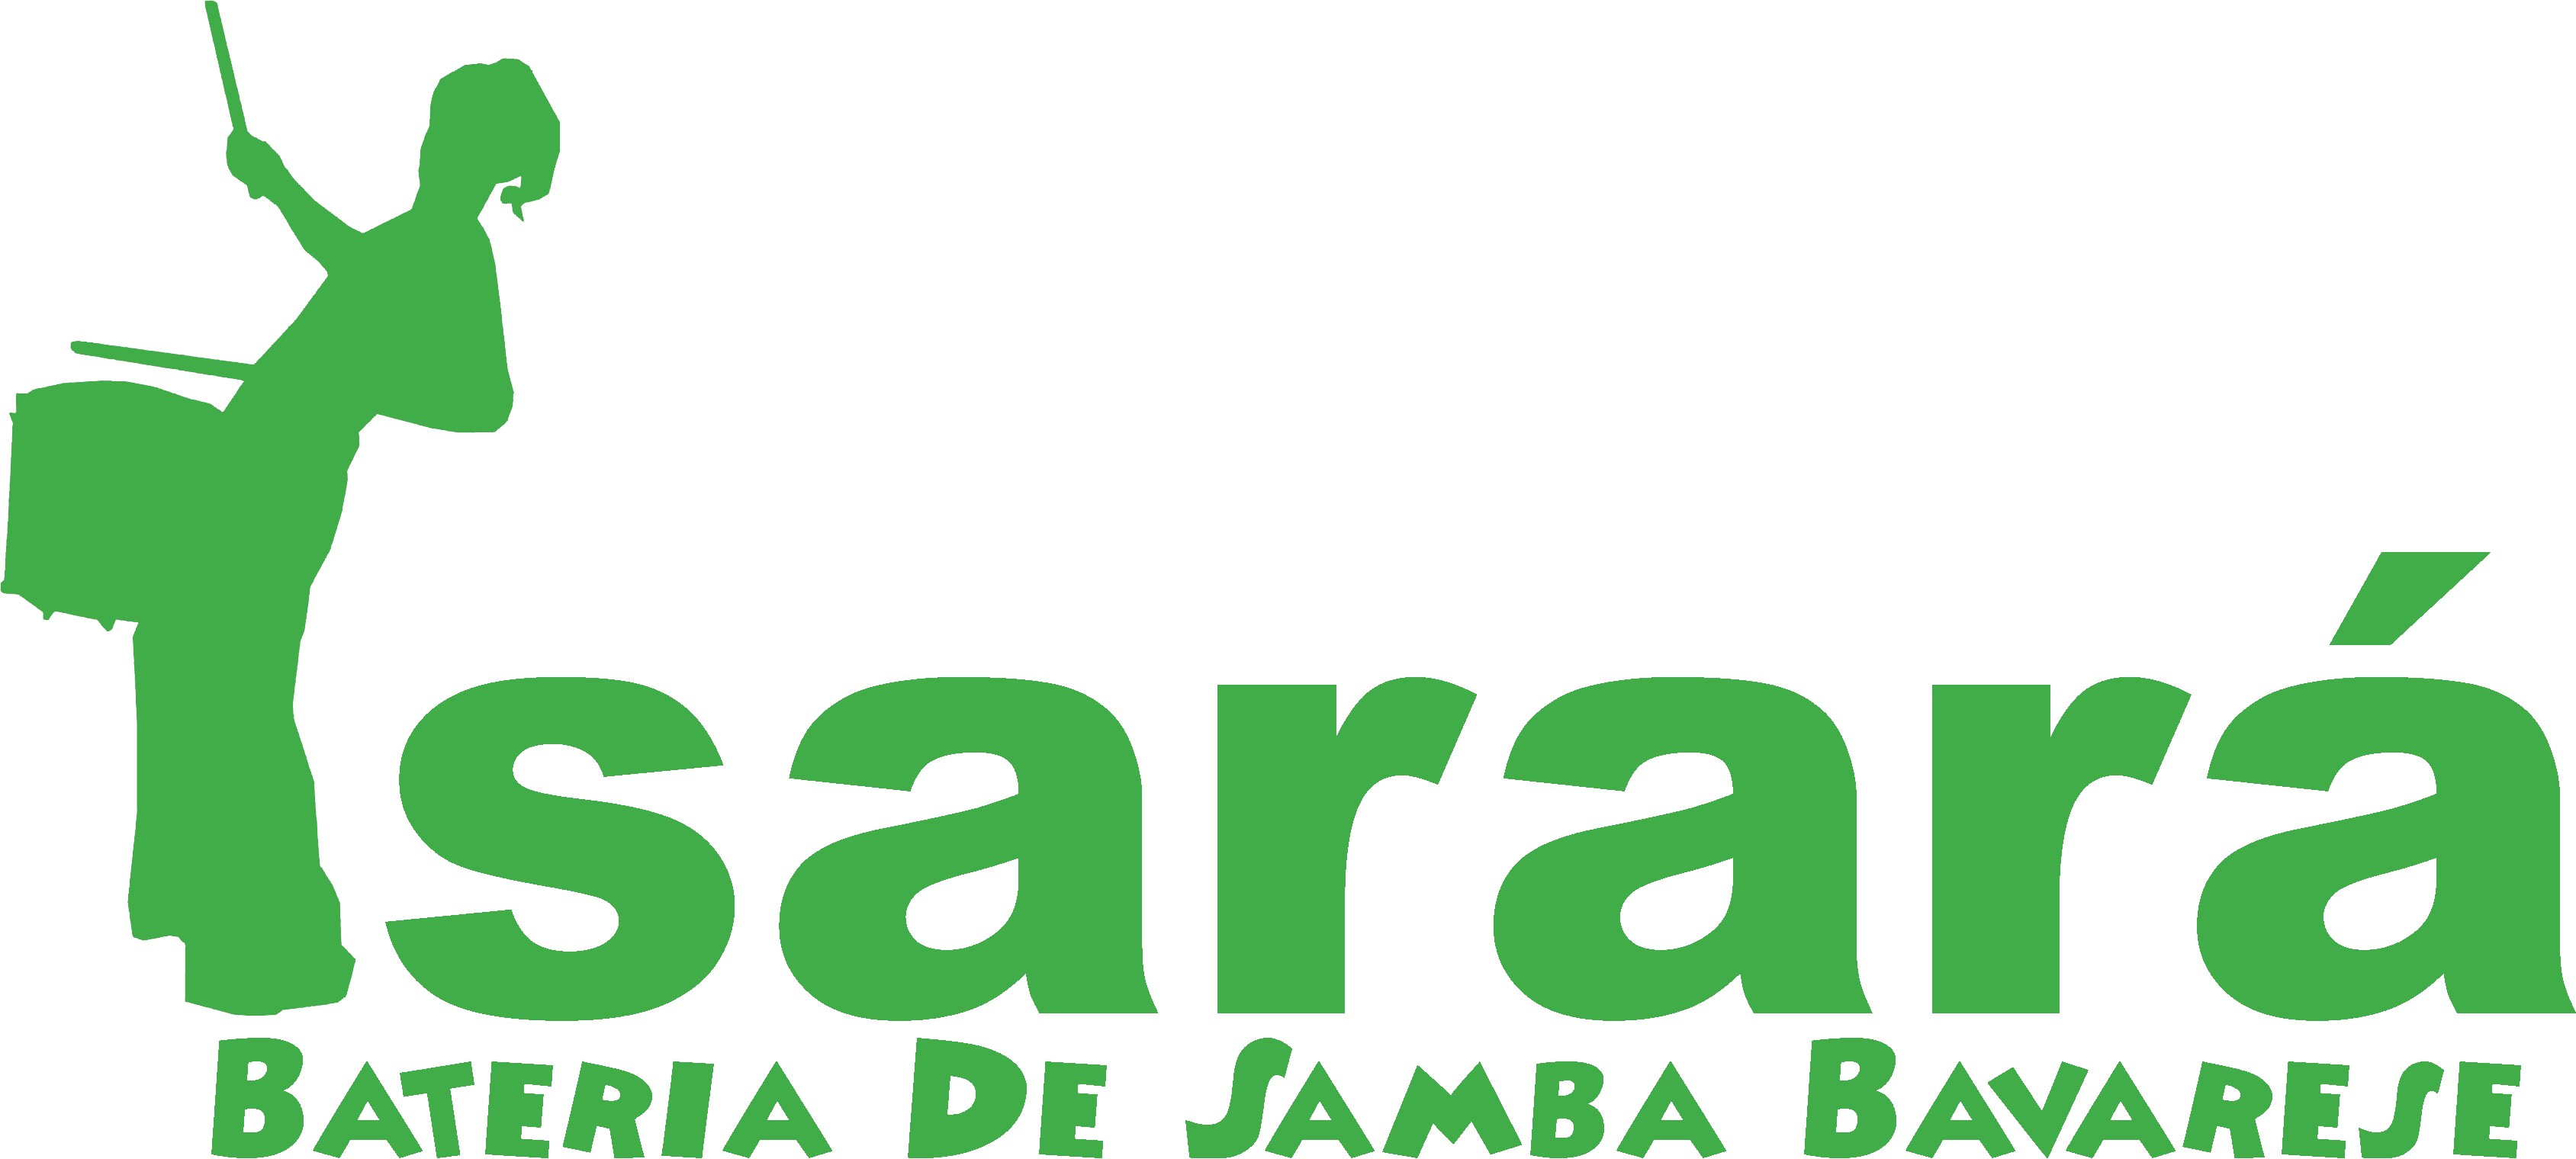 Sarará